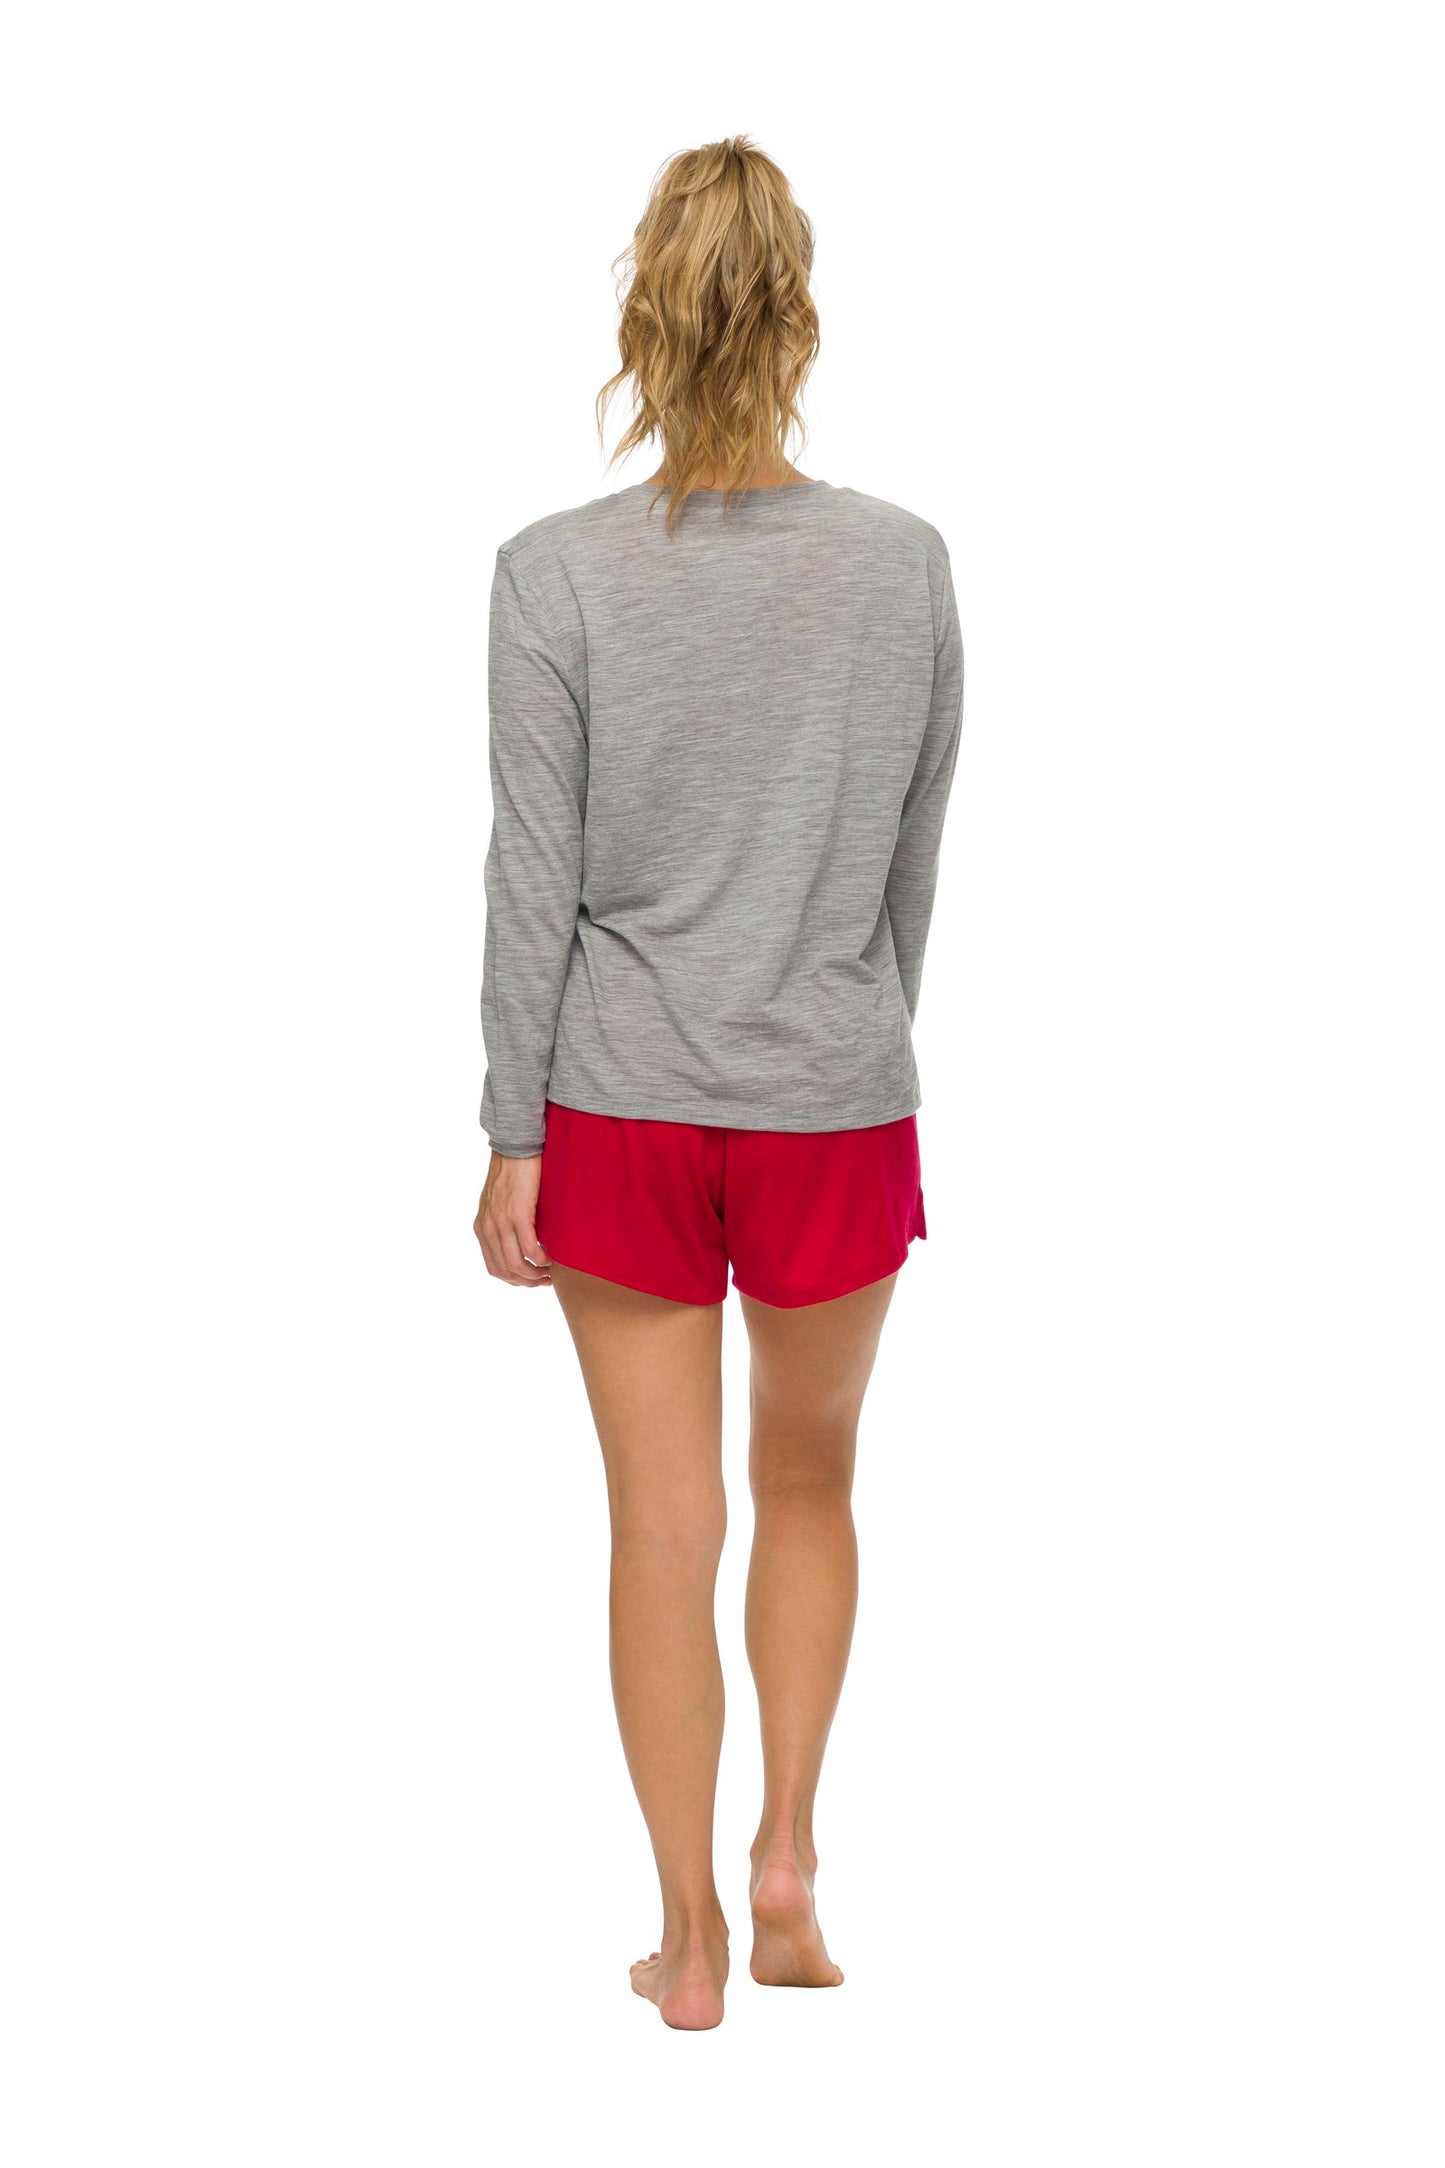 Women's Long Sleeve Pyjama Top | 100% Merino Wool Grey Marle